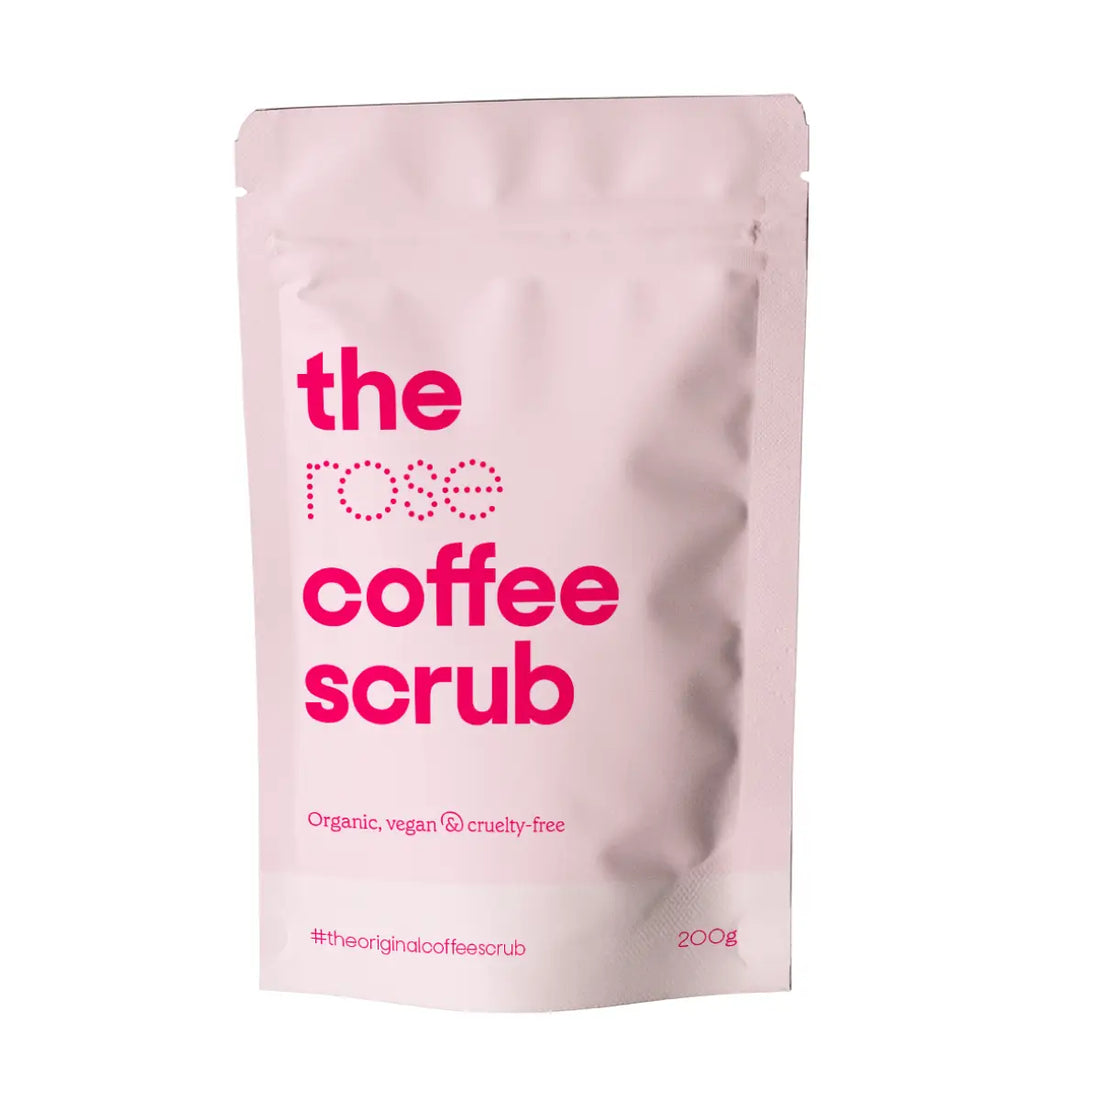 The Rose Coffee Scrub